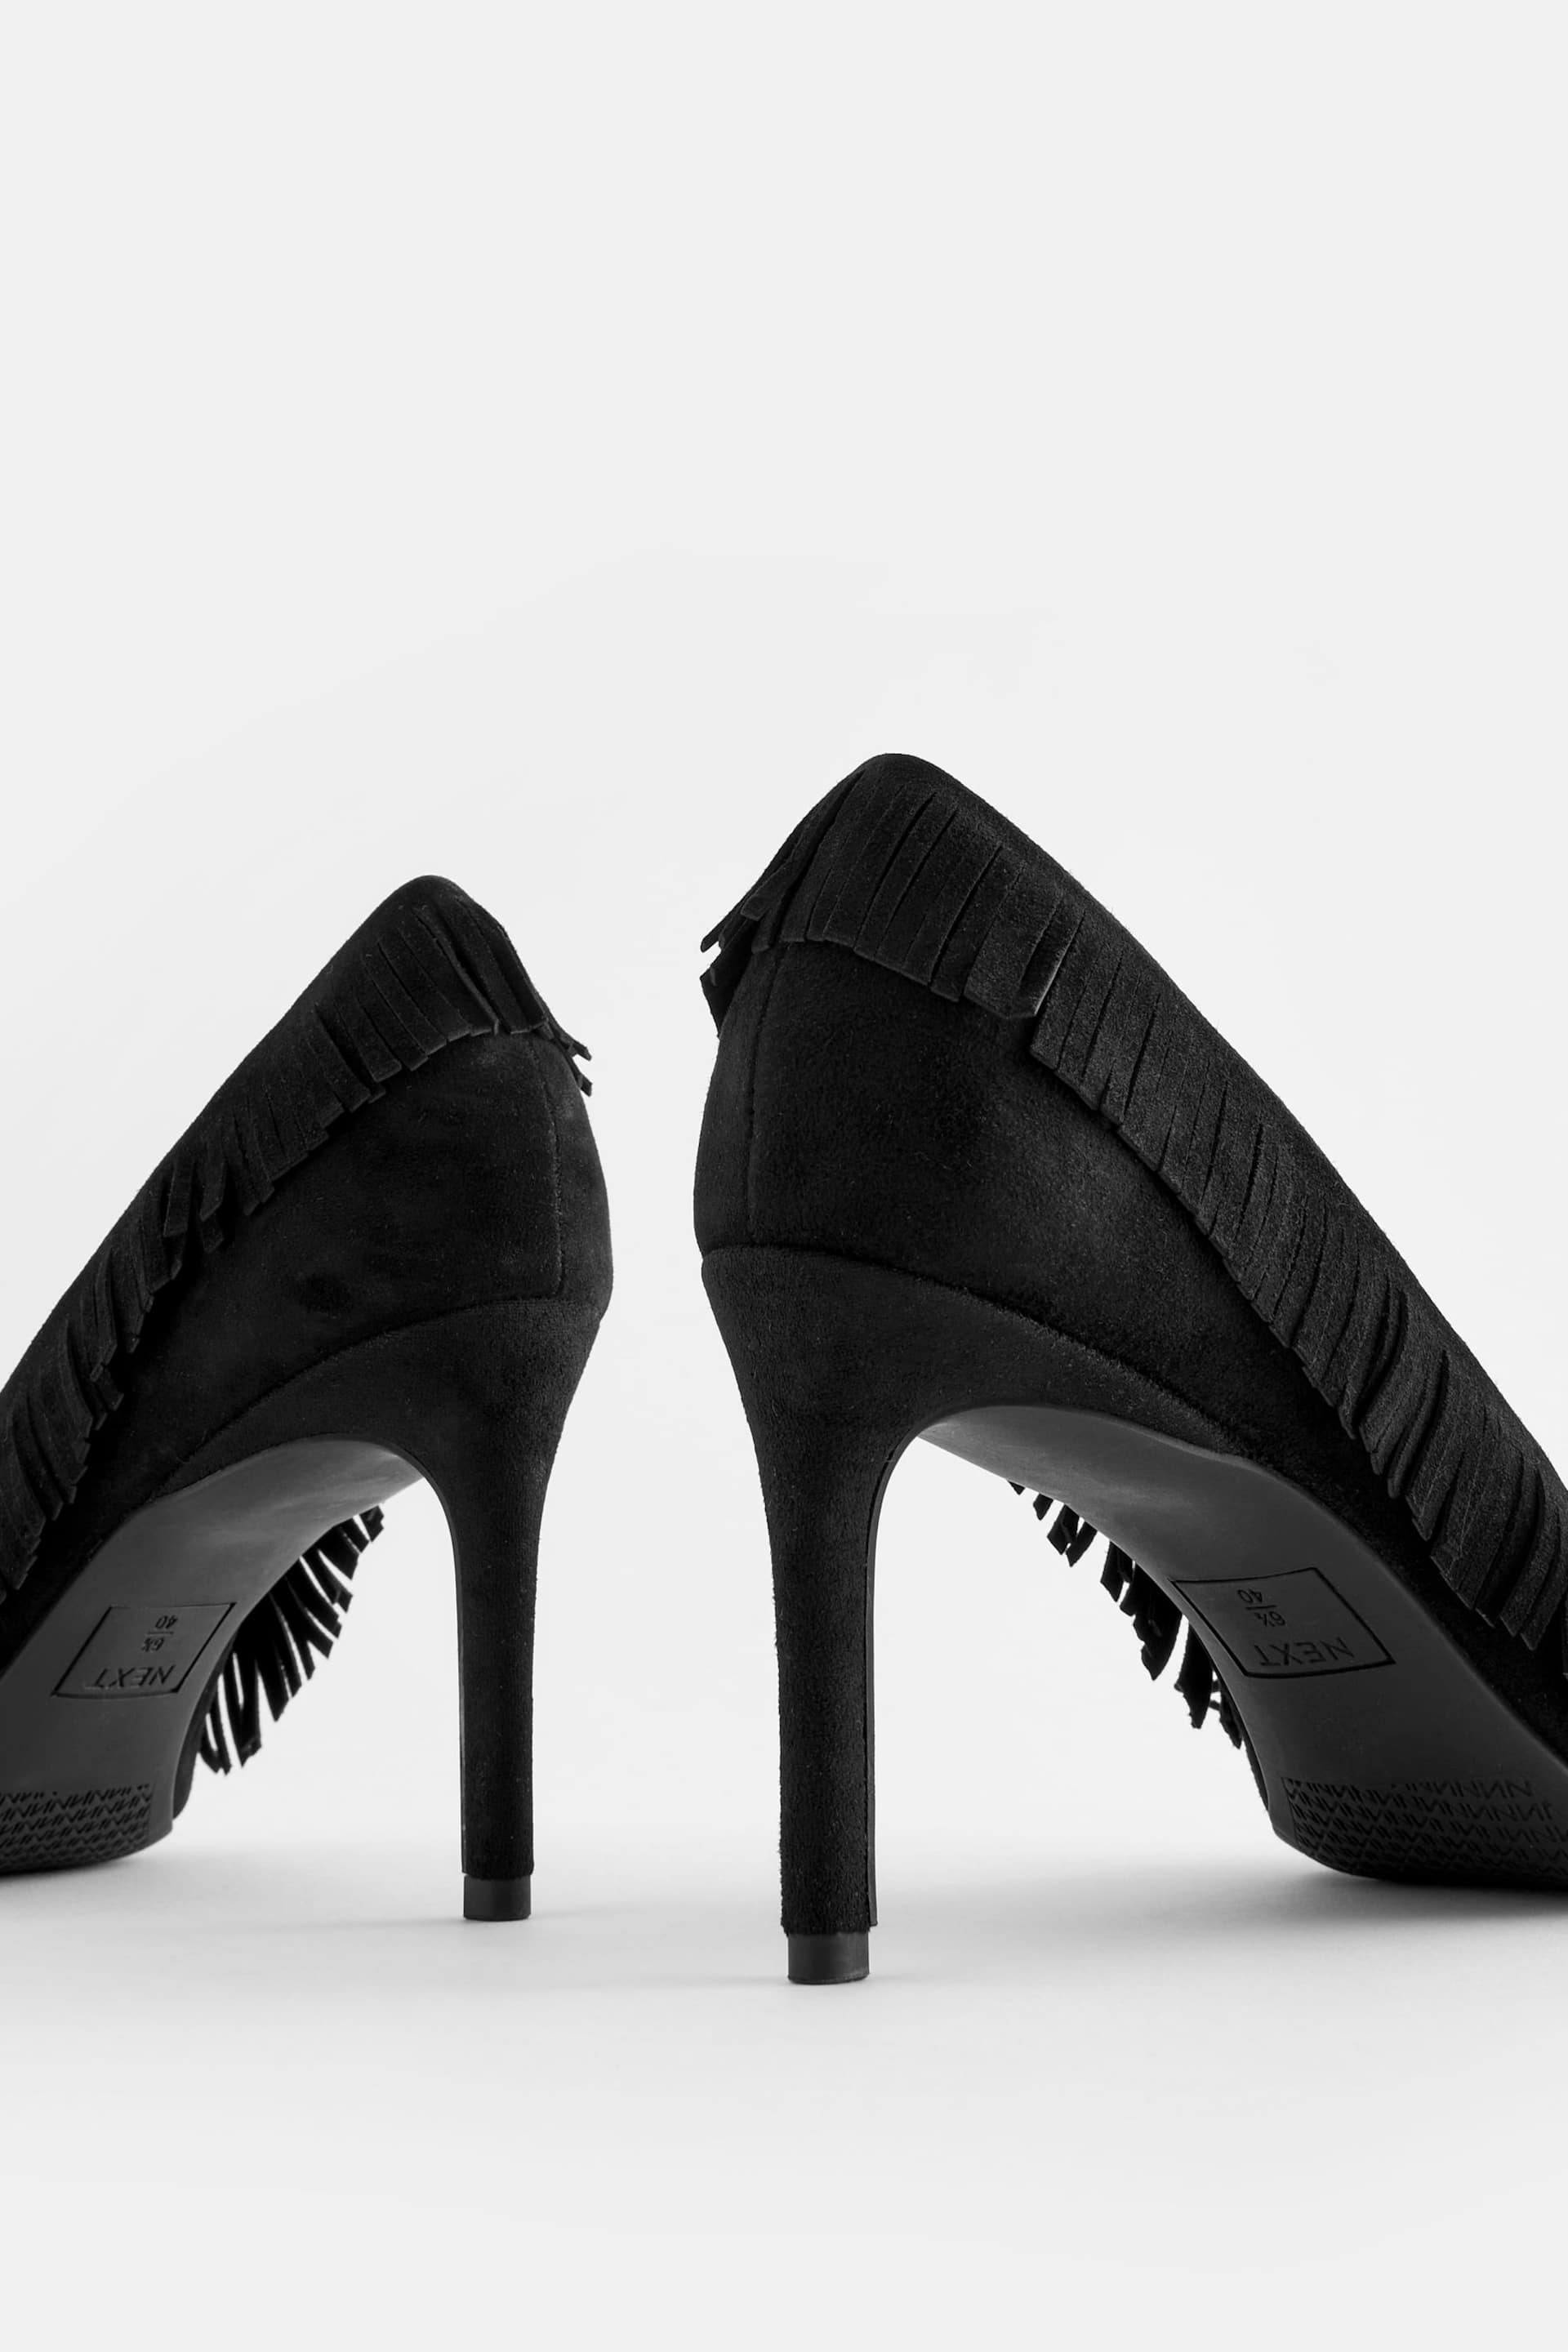 Black Forever Comfort Leather Fringe Court Shoes - Image 4 of 5